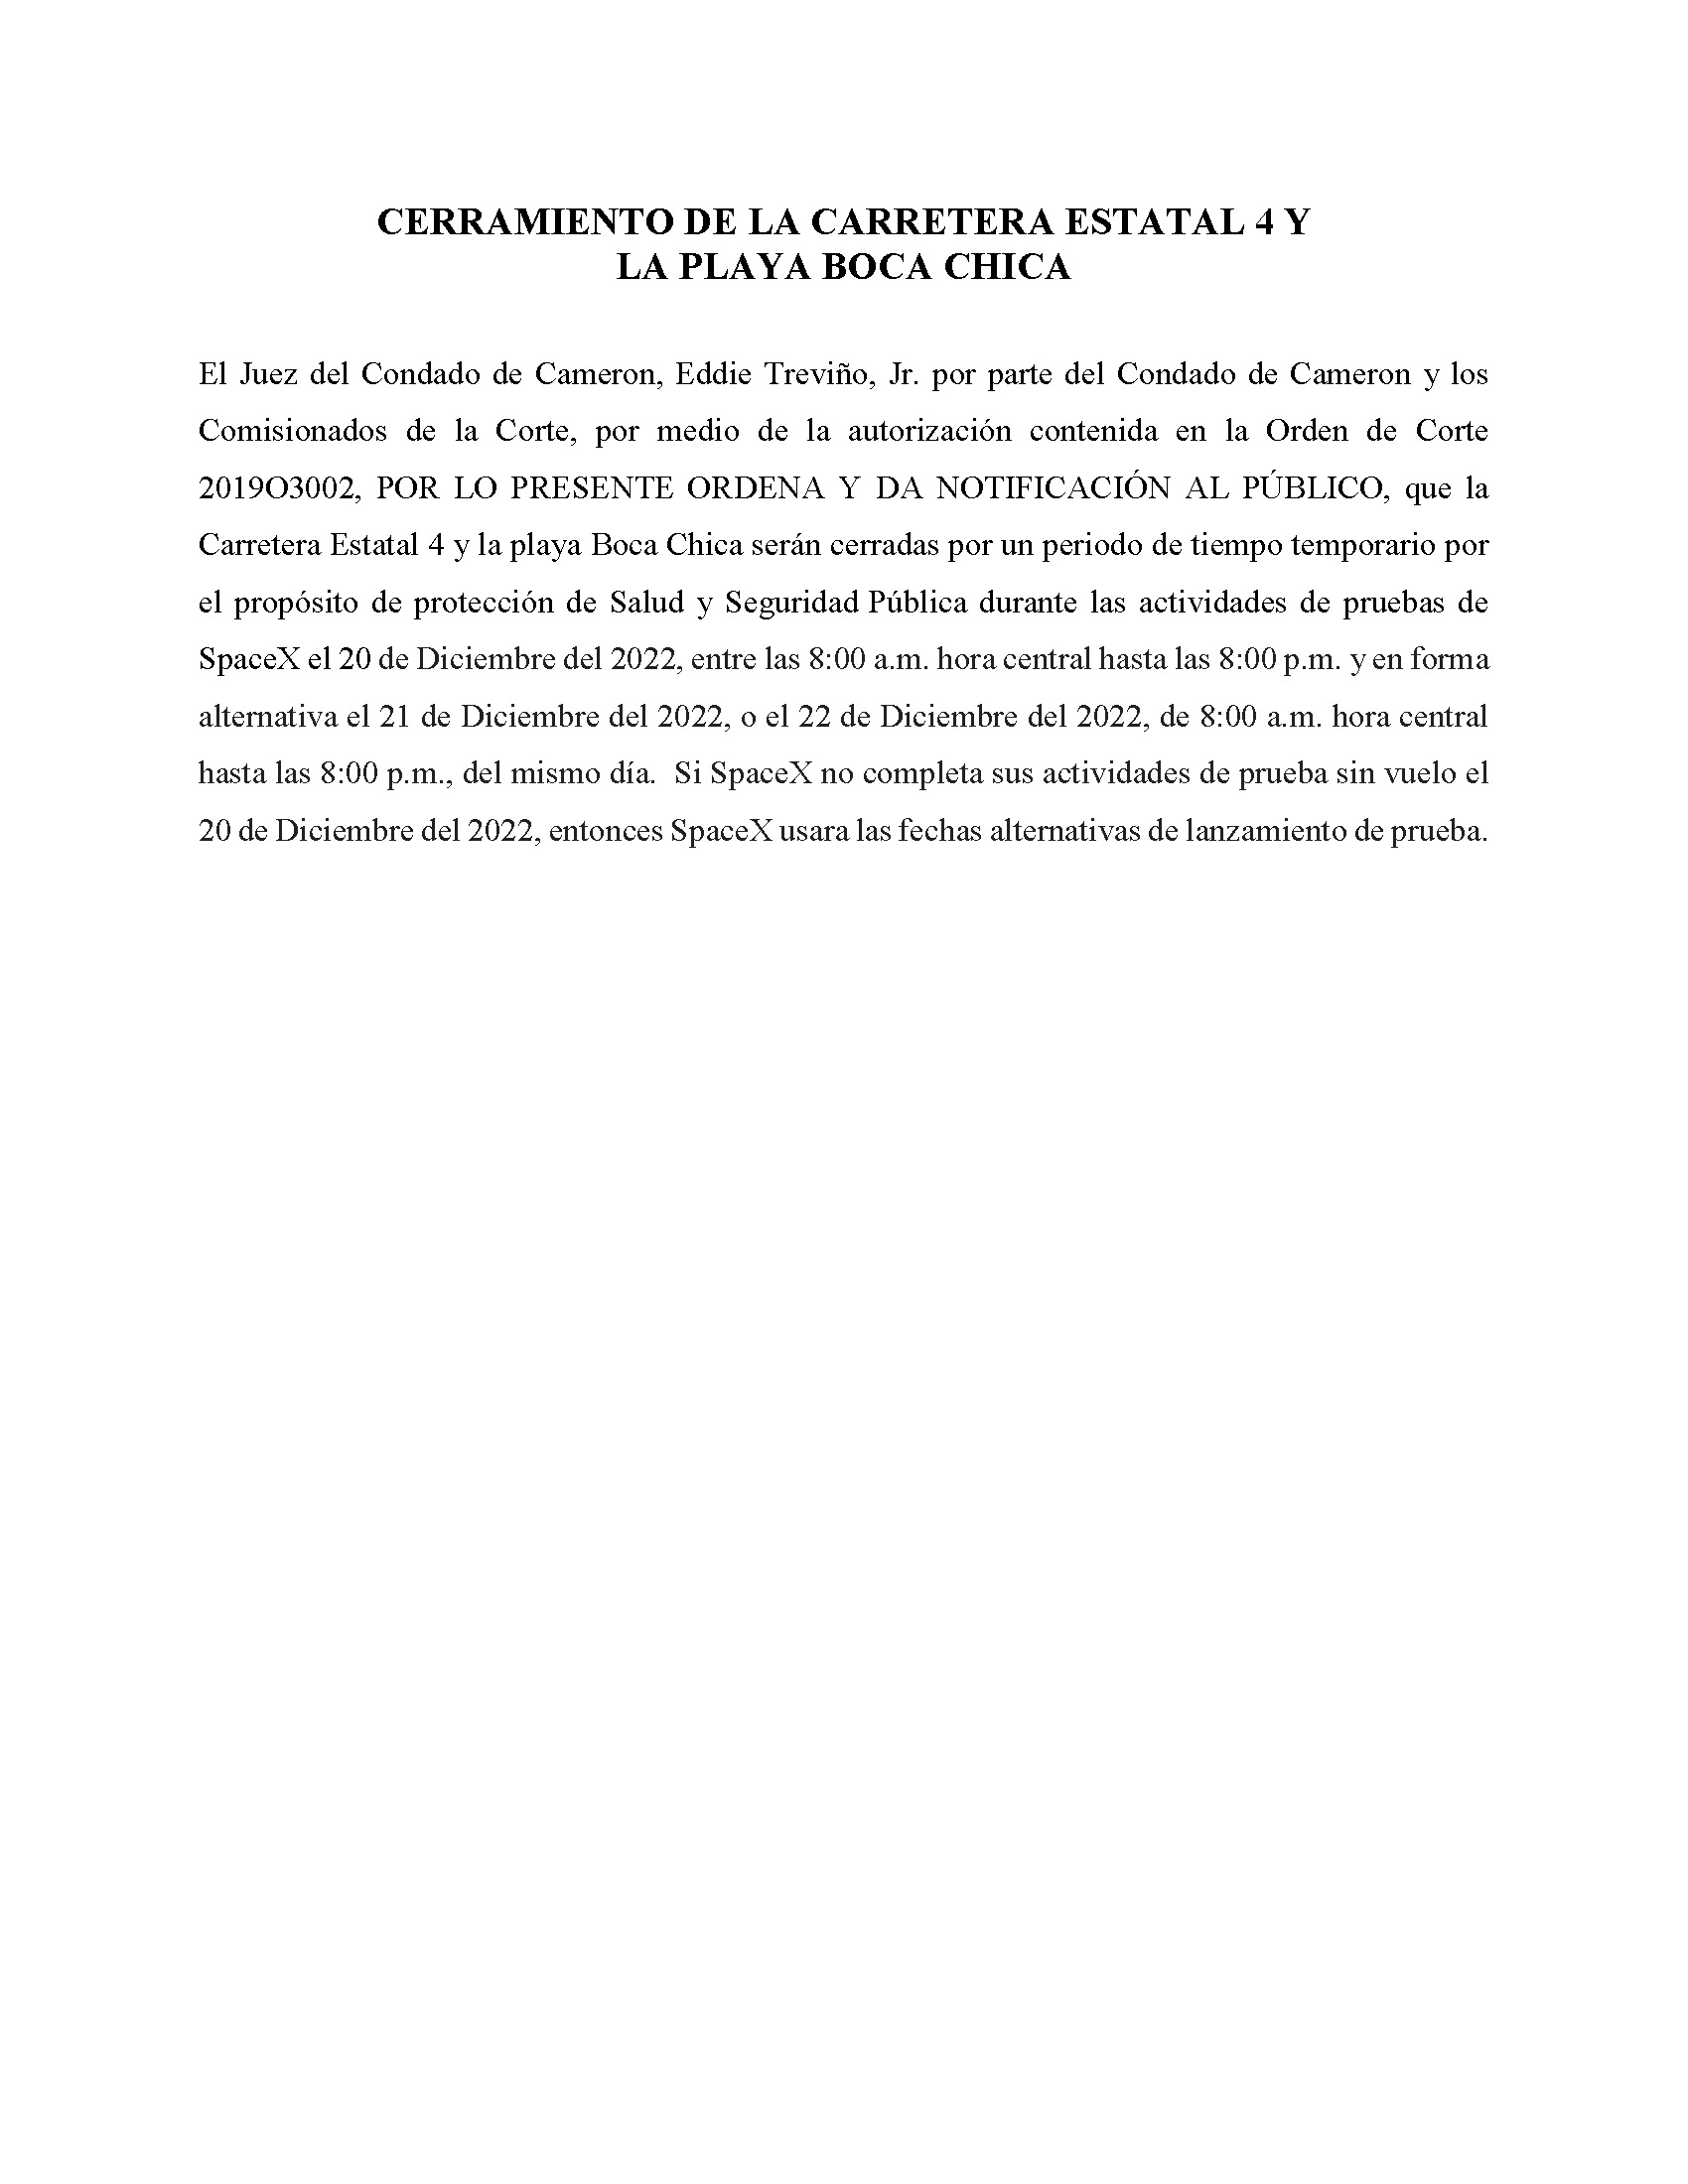 ORDER.CLOSURE OF HIGHWAY 4 Y LA PLAYA BOCA CHICA.SPANISH.12.20.2022